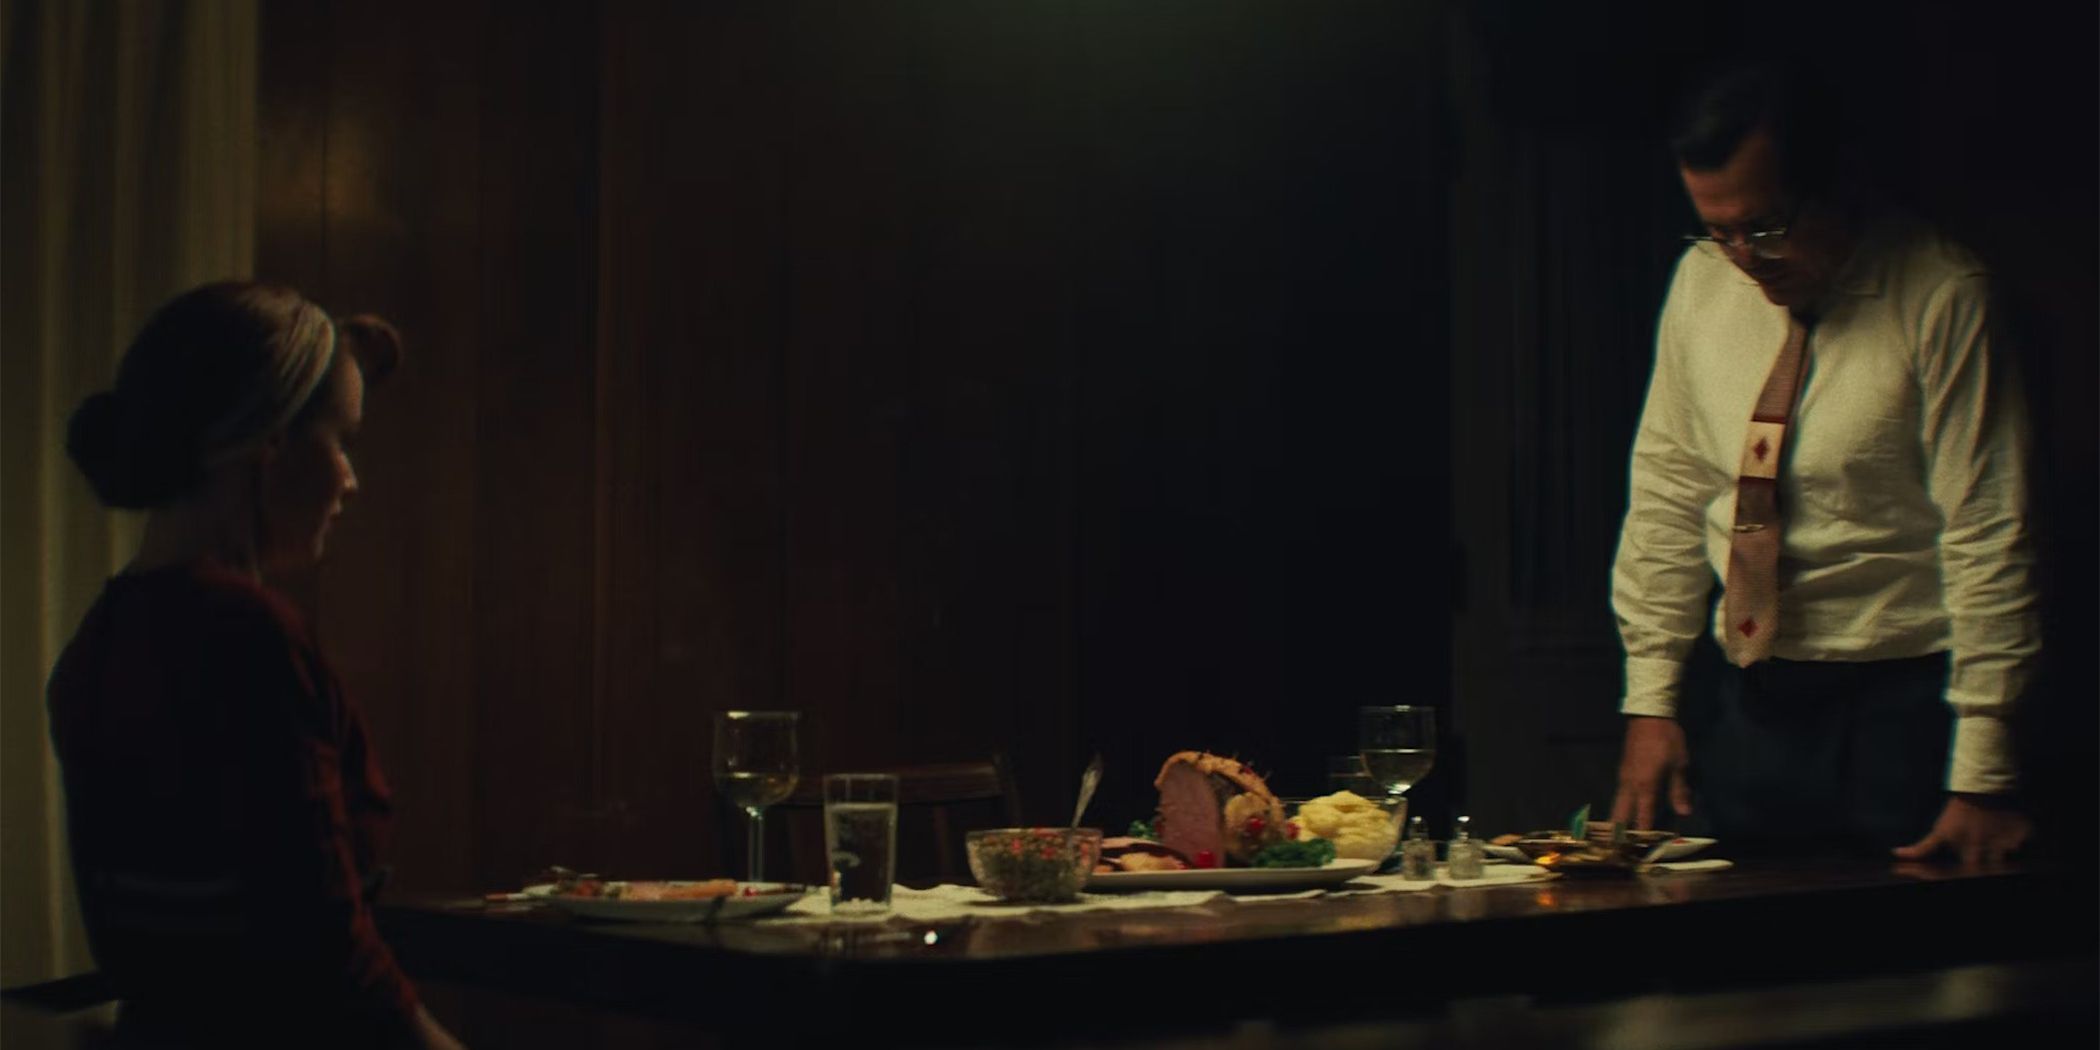 Hani Furstenberg and John Leguizamo having a tense moment at the dinner table in The Green Veil